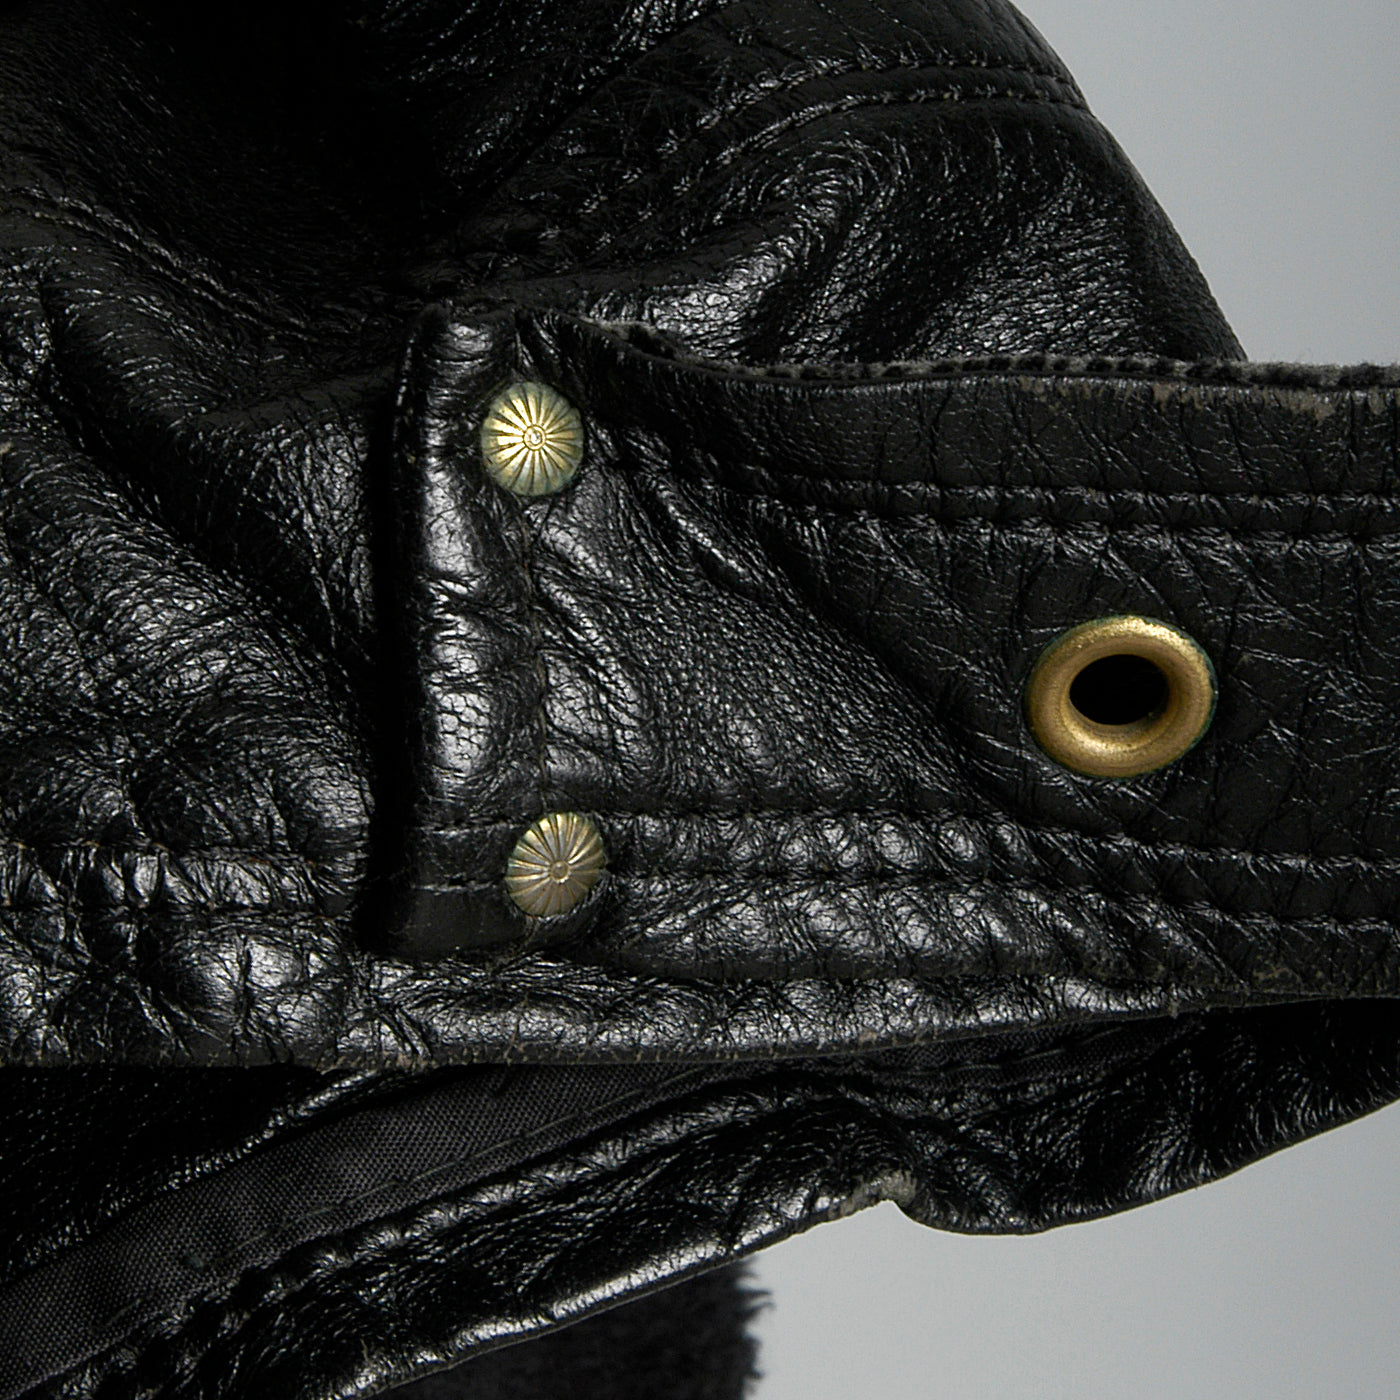 1960s Men's Black Leather Biker Jacket with Belted Waist